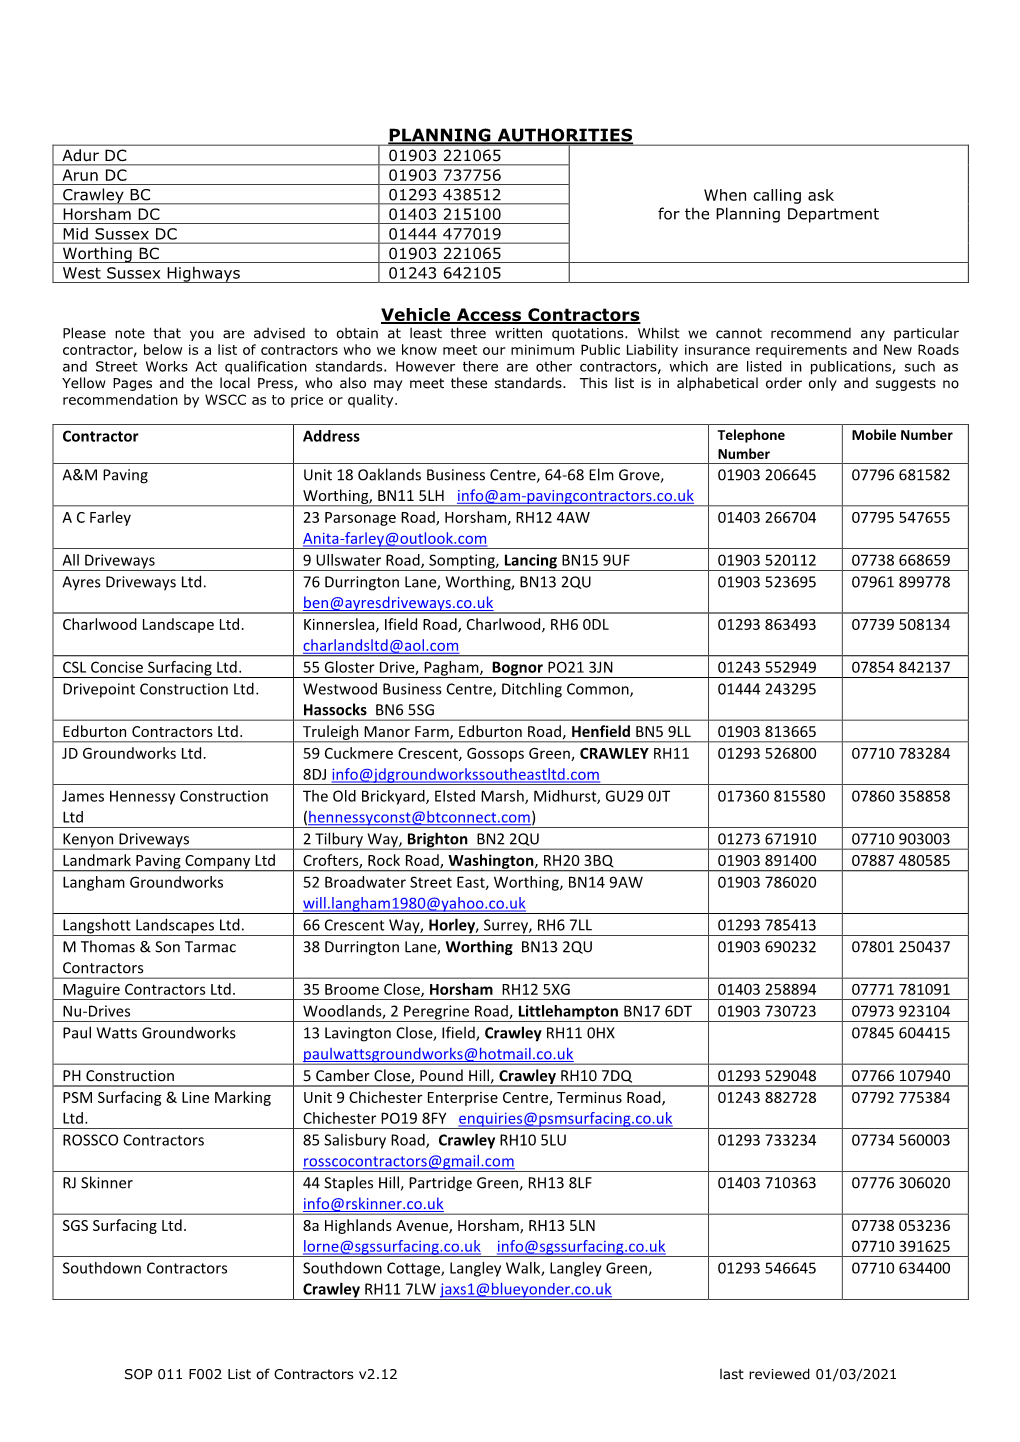 Vehicle Access Contractors List (PDF, 195KB)